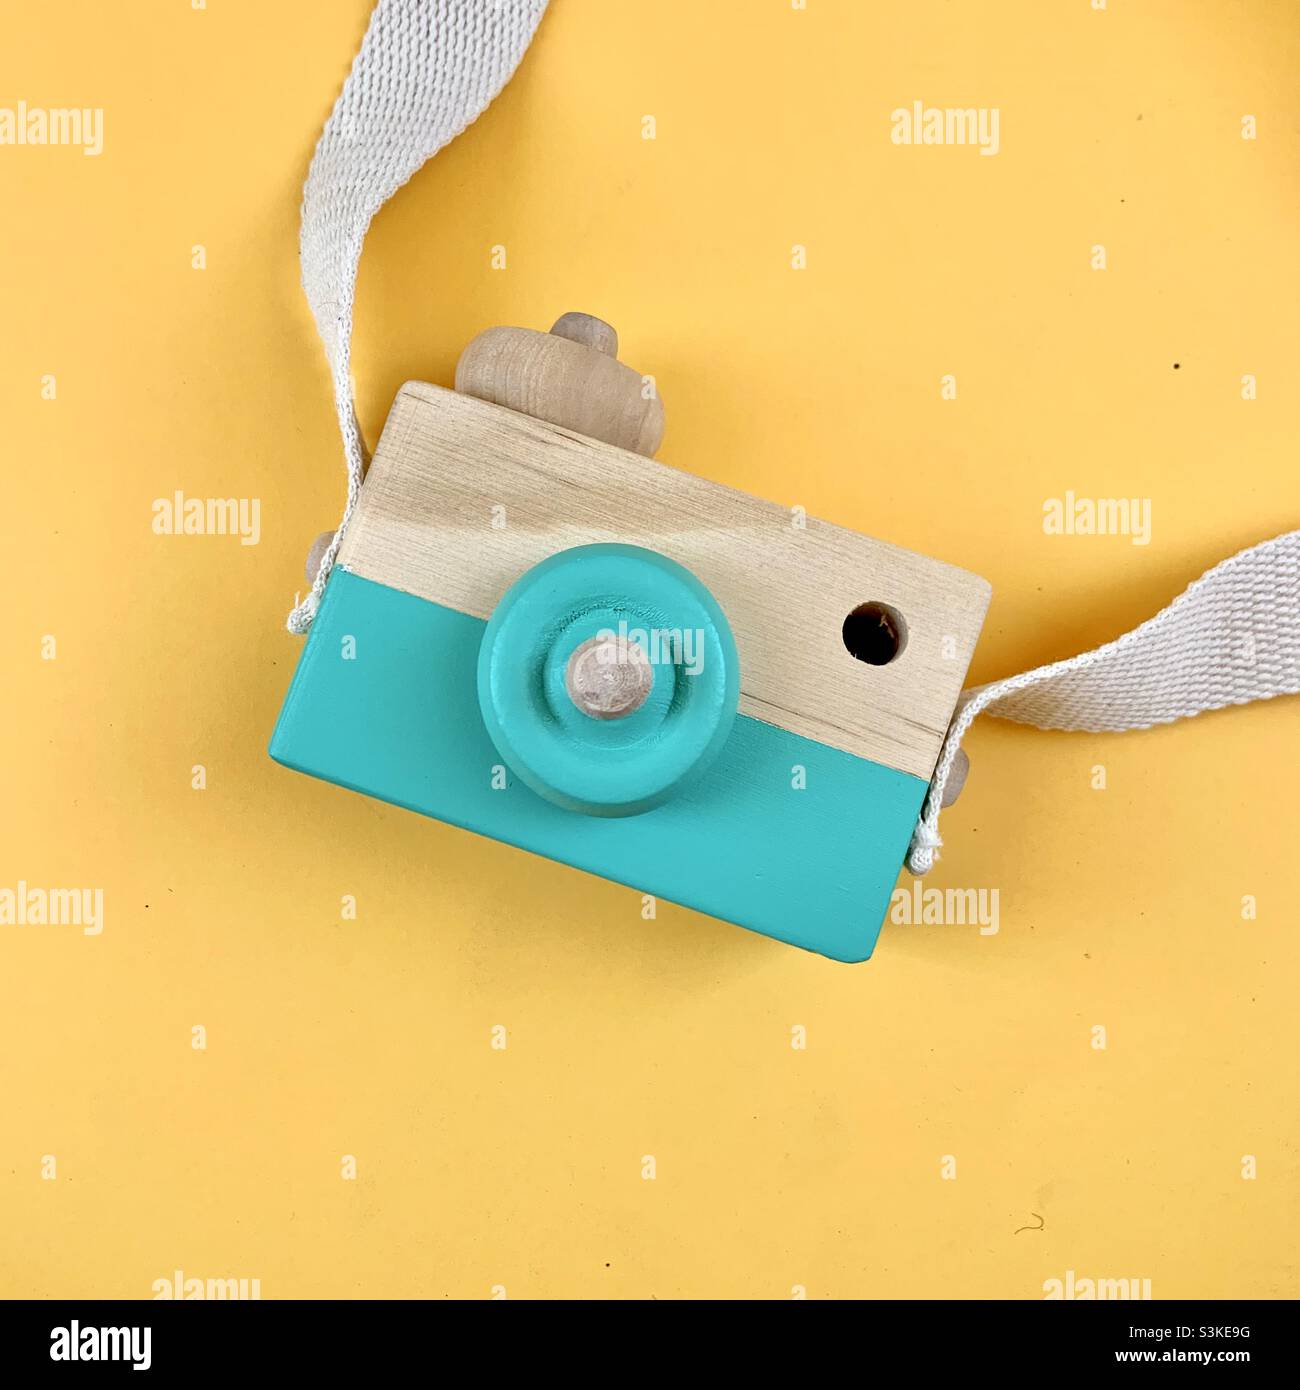 Toy photo camera on yellow background Stock Photo